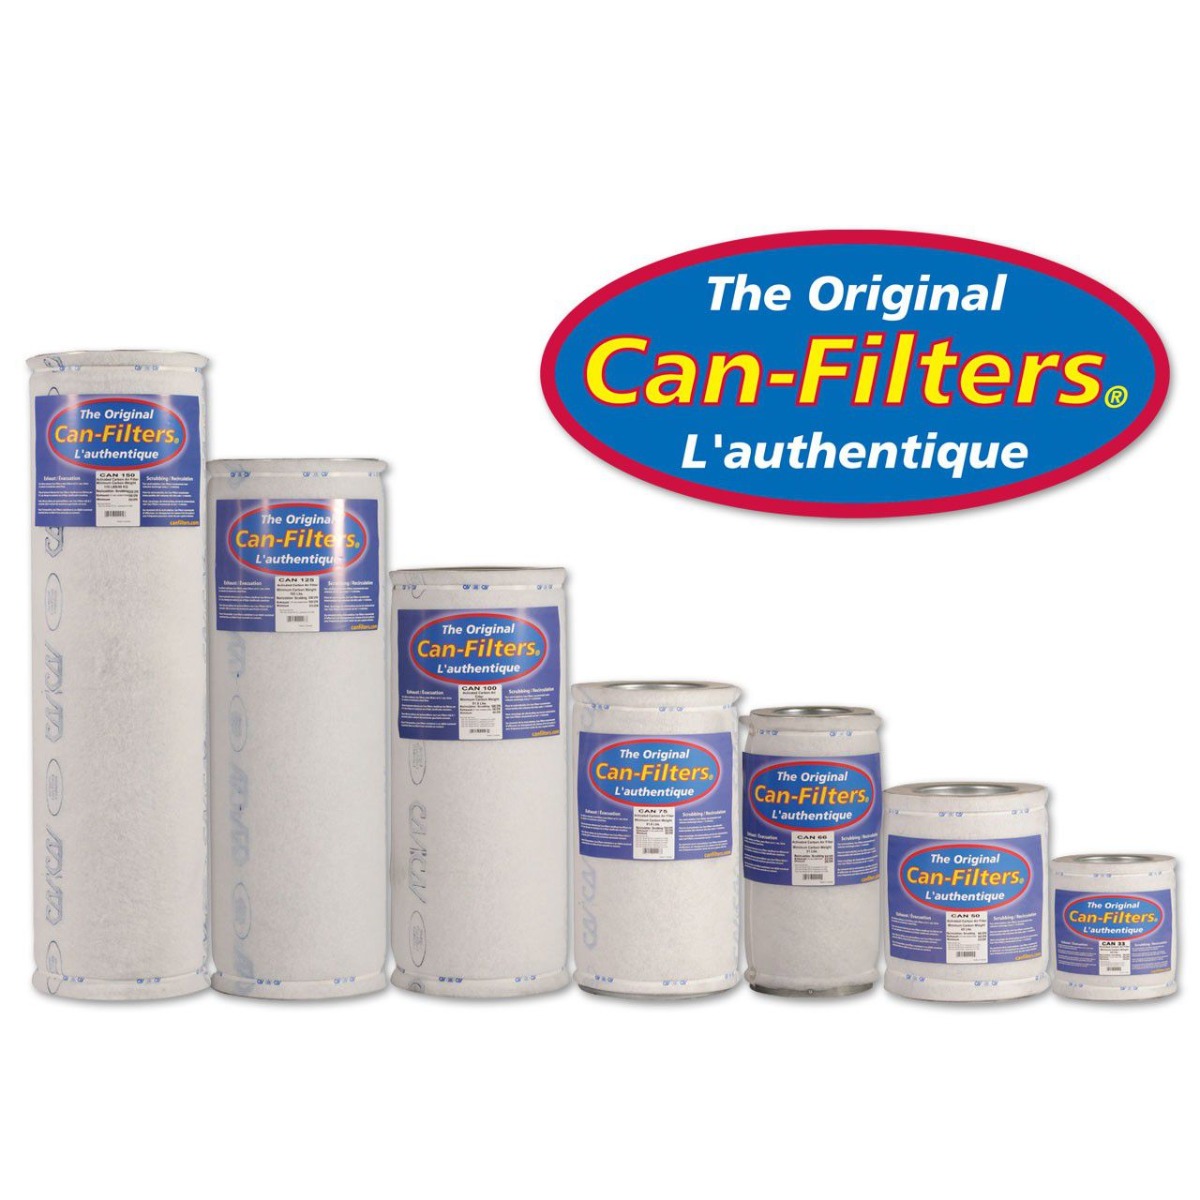 Filtro de Carbón Antiolores CAN-Filter Original